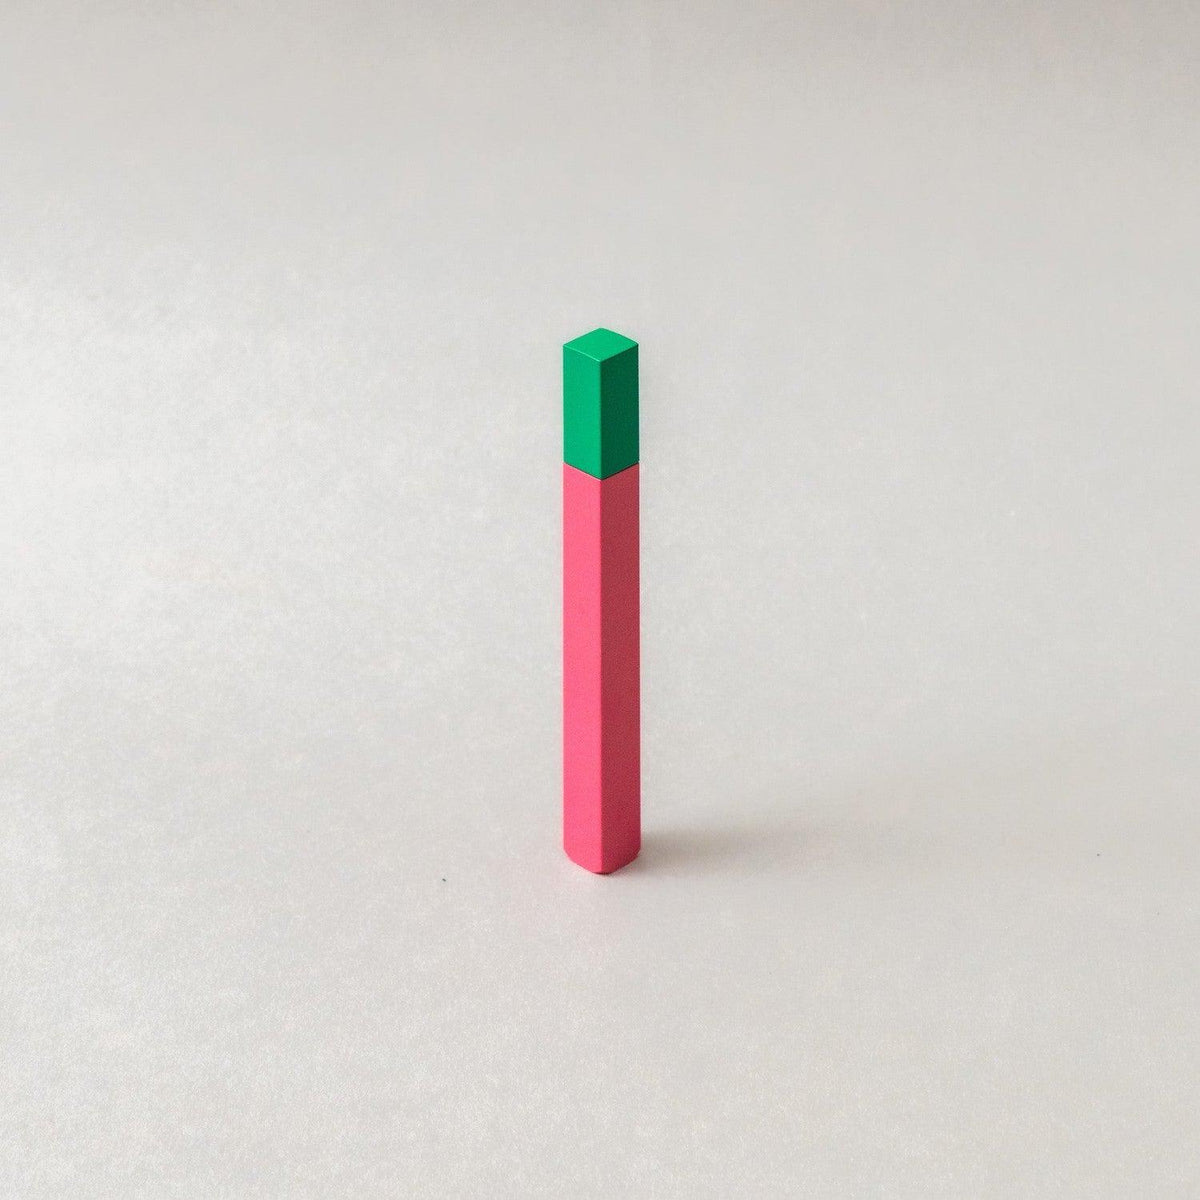 TSUBOTA PEARL - Queue Gloss Pink/Green Petrol Lighter